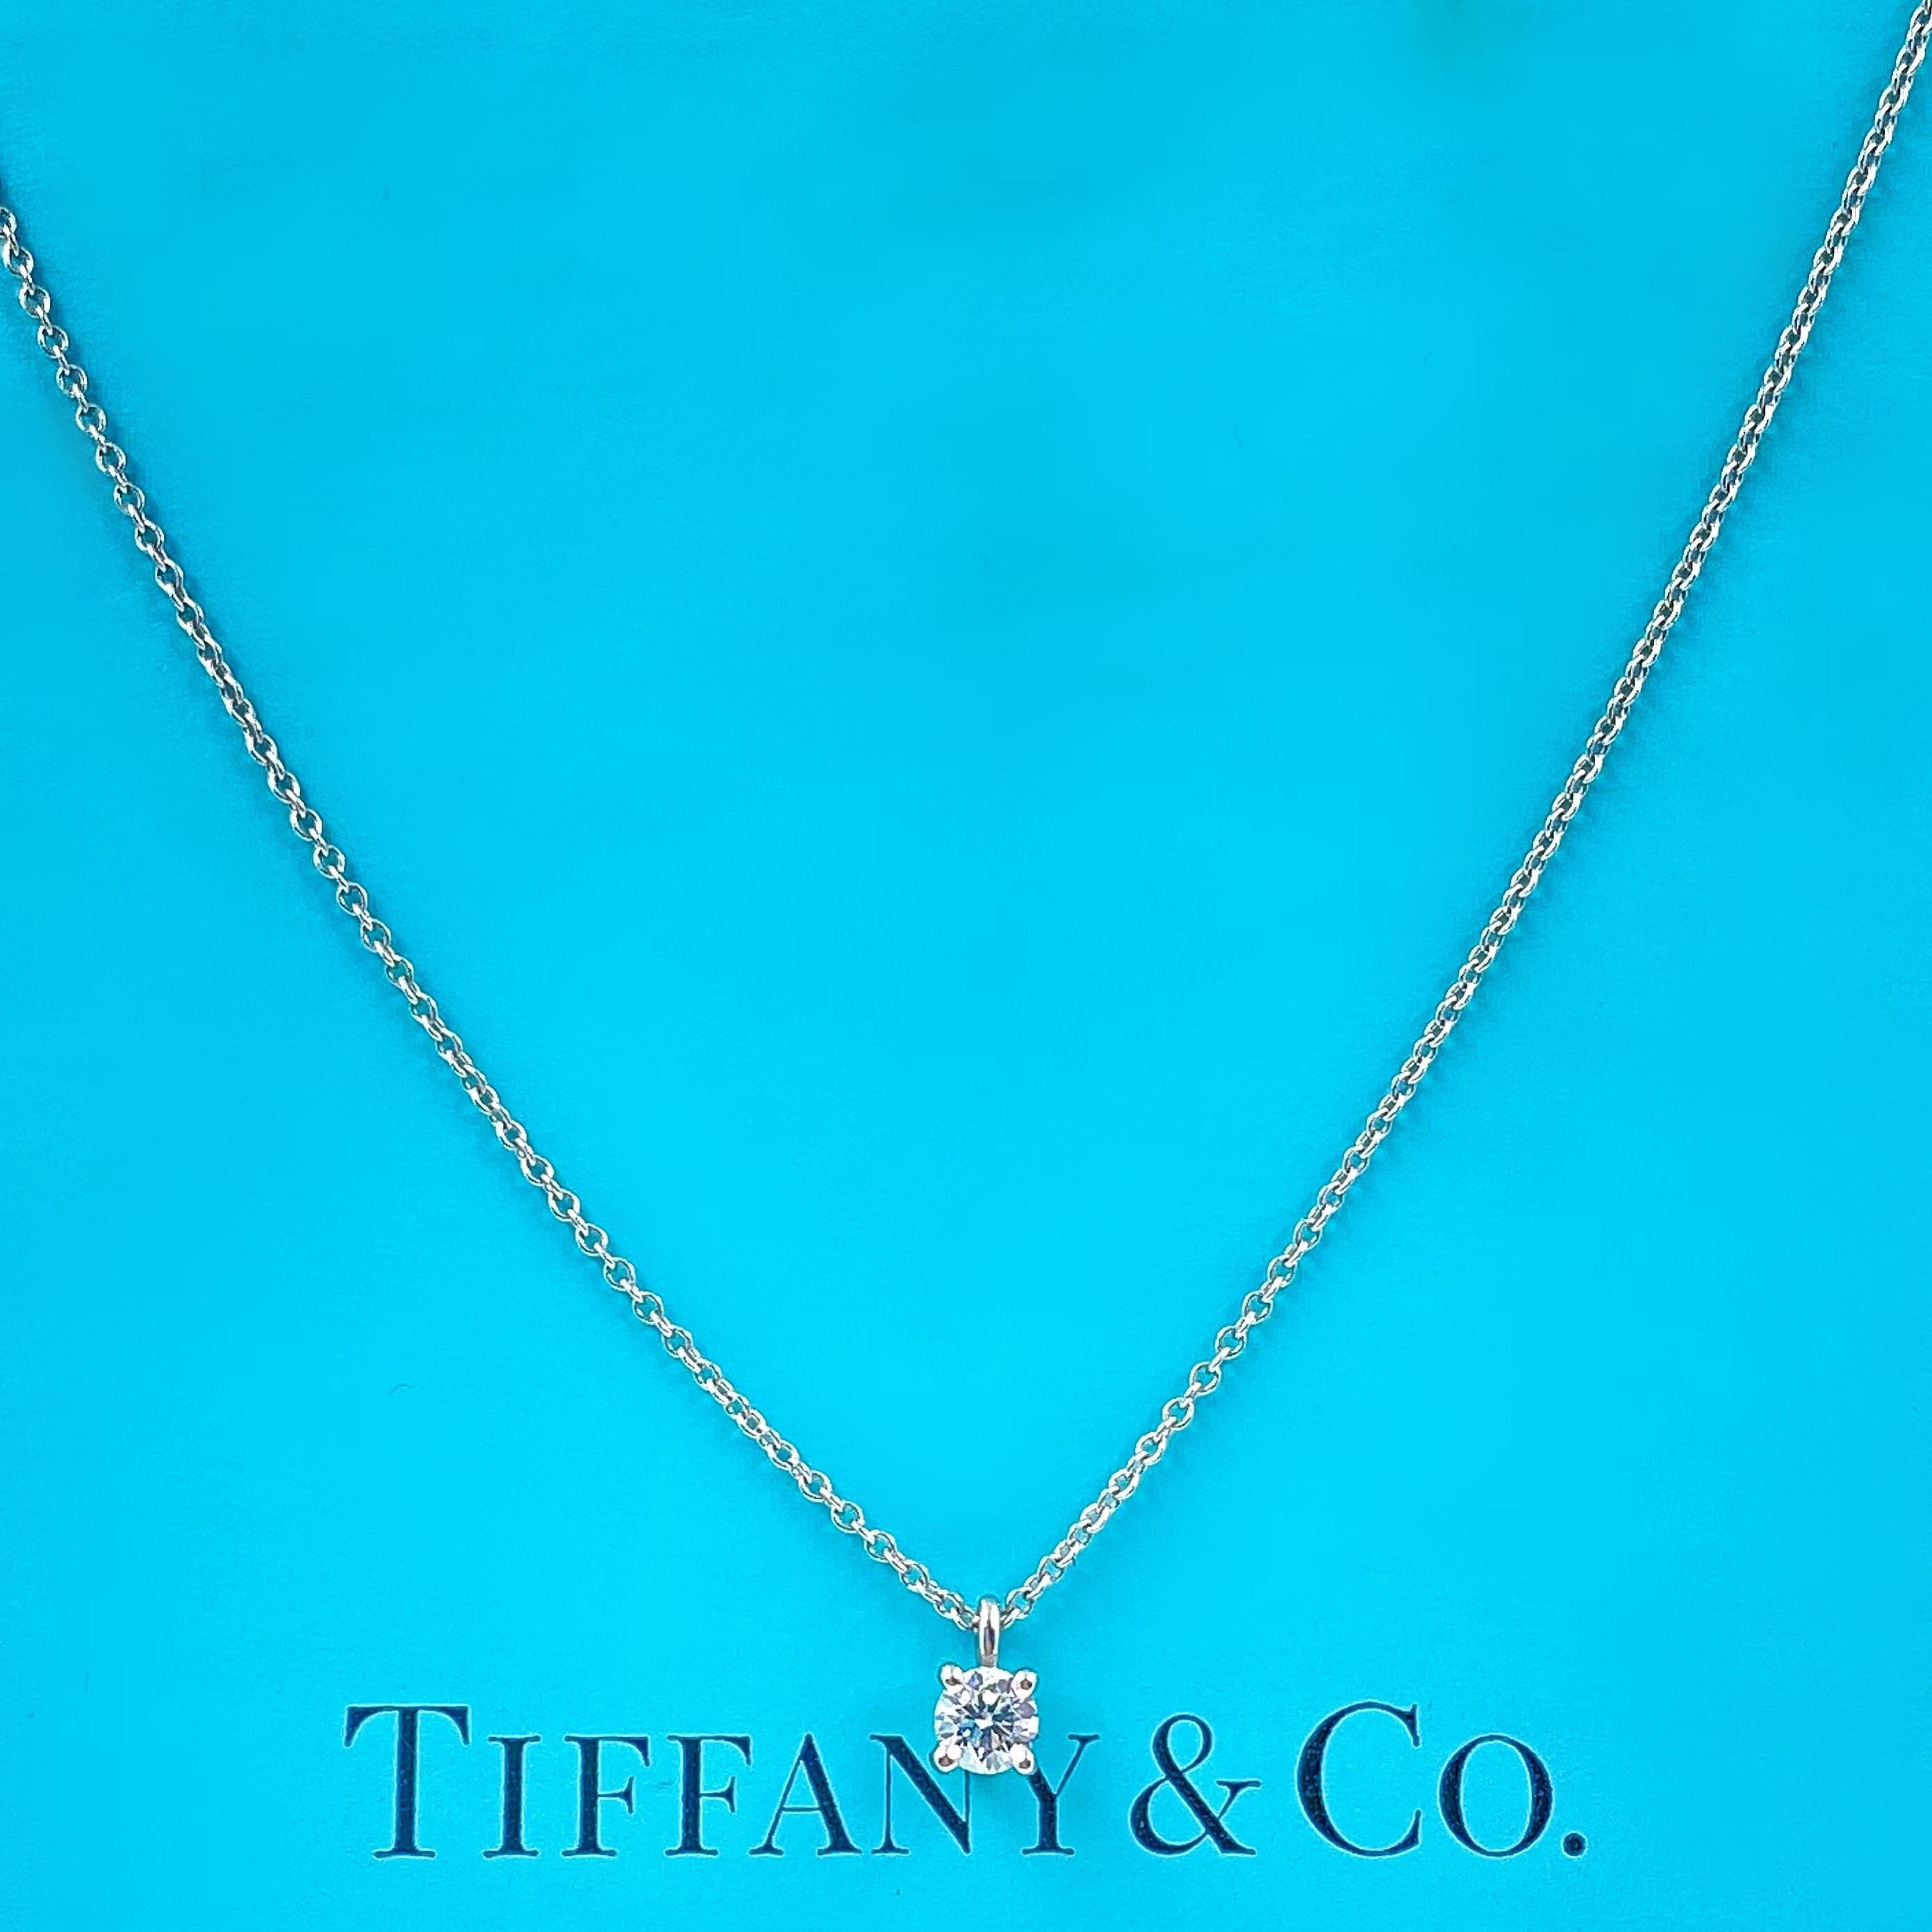 Tiffany Solitaire Diamond Pendant
Style:  four-Prong Basket Solitaire
Metal:  PT950 Platinum
Length:  16' Inches
Main Diamond:  Round Brilliant Diamond 0.18 cts
Color & Clarity:  G, VVS
Hallmark:  ©TIFFANY&CO. PT950
Includes:  T&C Microsuede Pendant